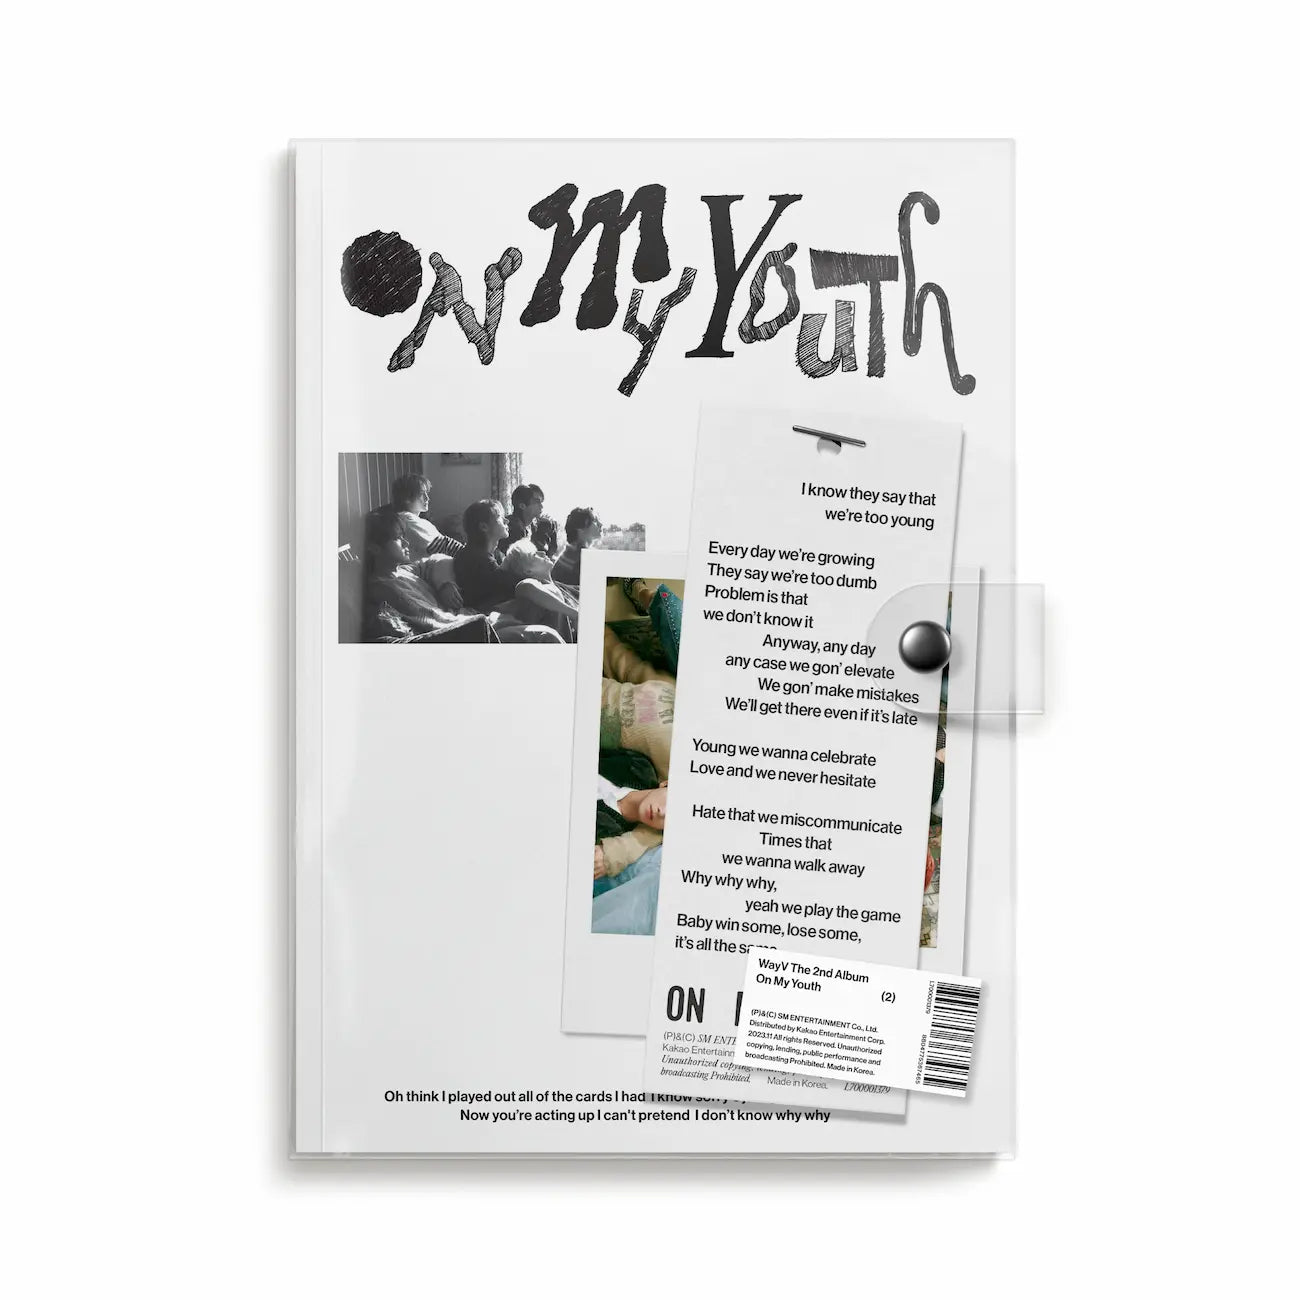 WayV - 2nd Album ‘On My Youth’ (Diary Version)